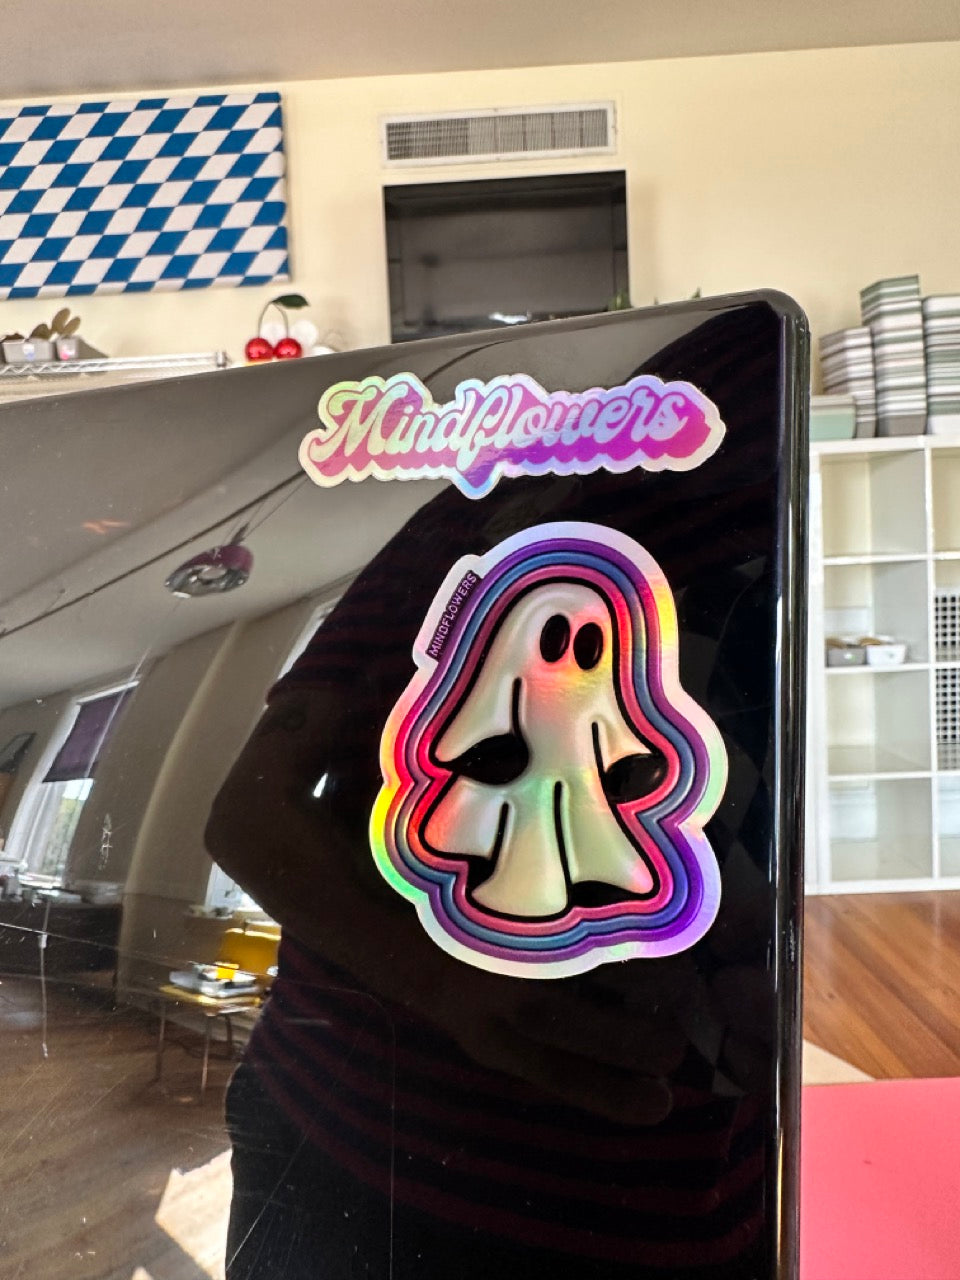 Friendly Ghost Holographic Vinyl Sticker